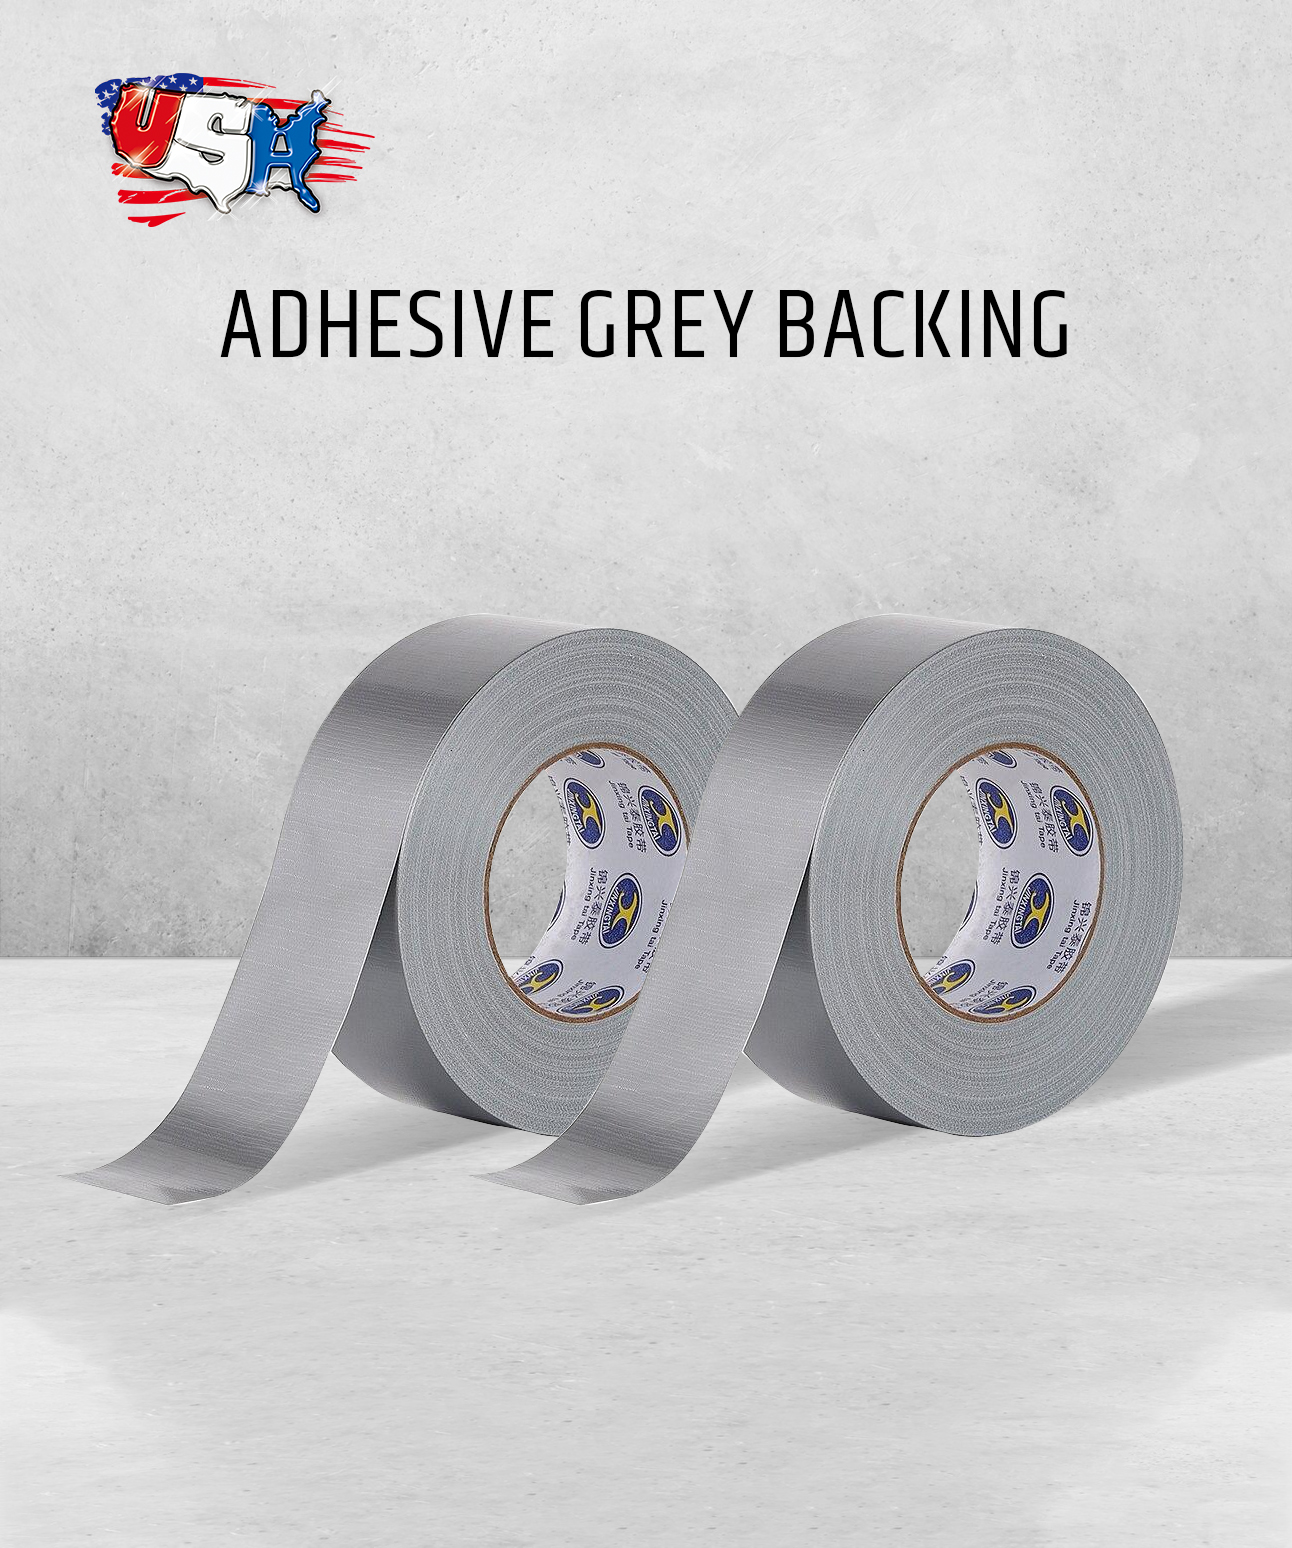 Adhesive Grey Backing